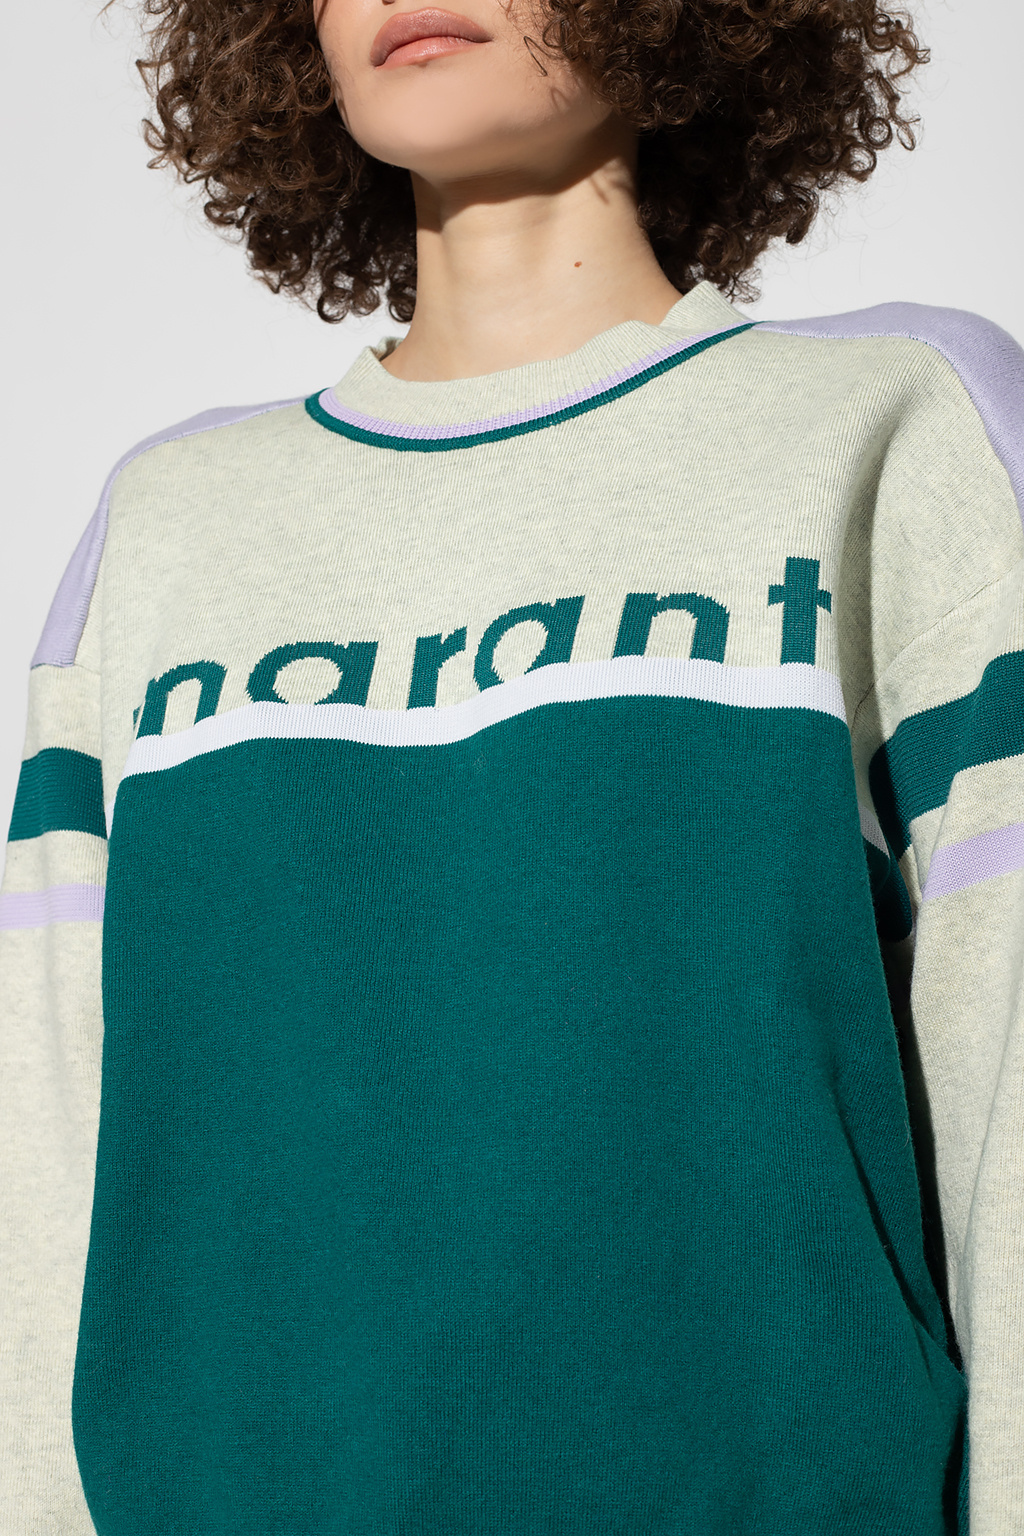 Marant Étoile ‘Carry’ sweater